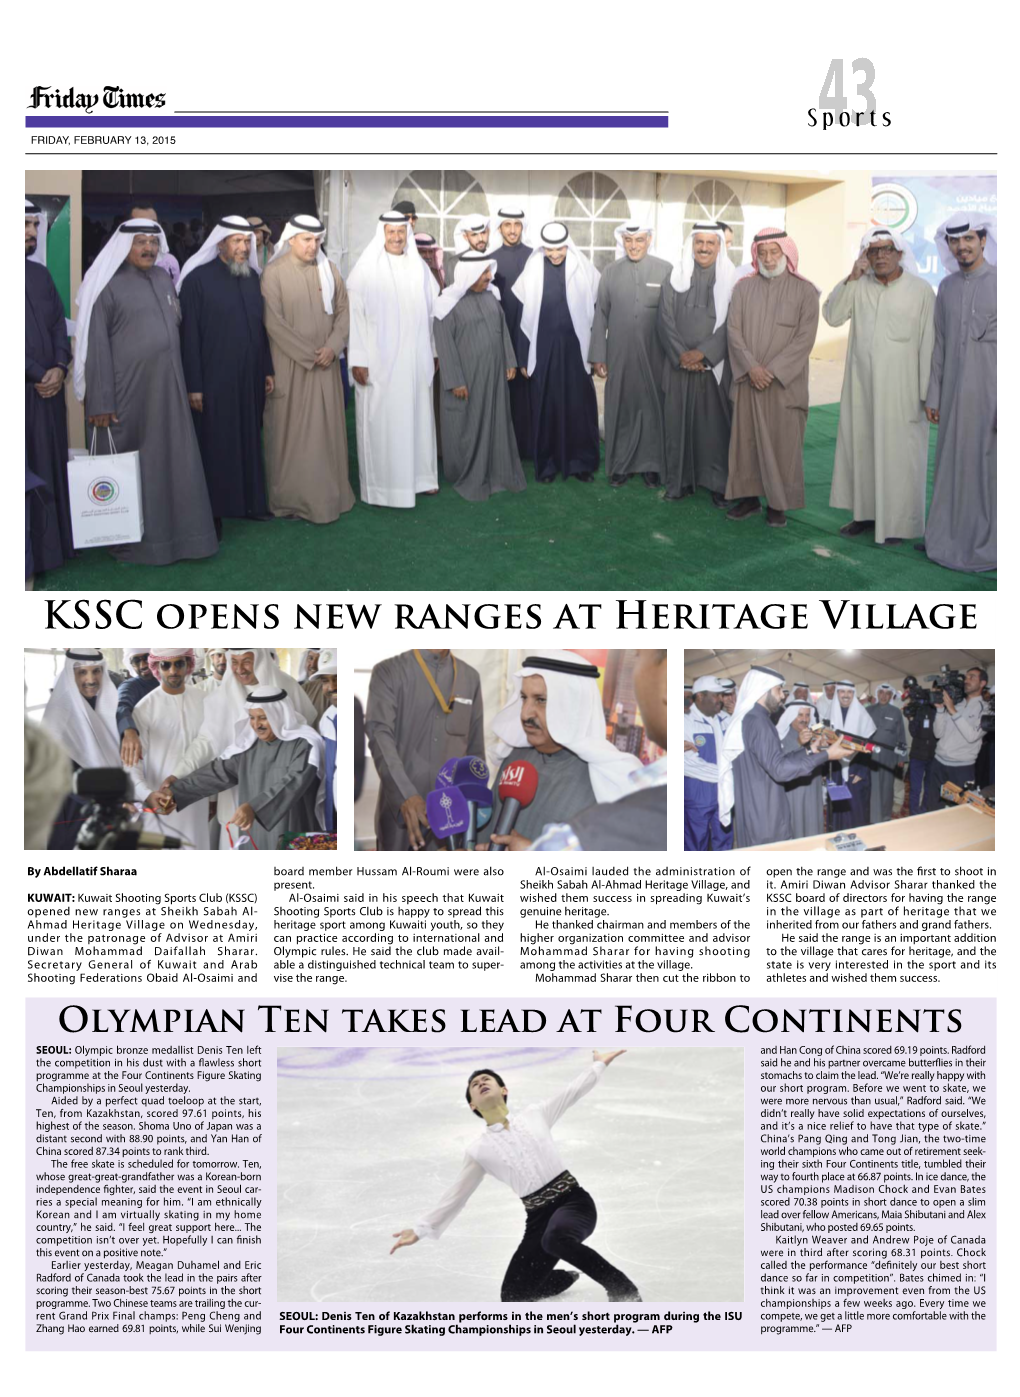 KSSC Opens New Ranges at Heritage Village